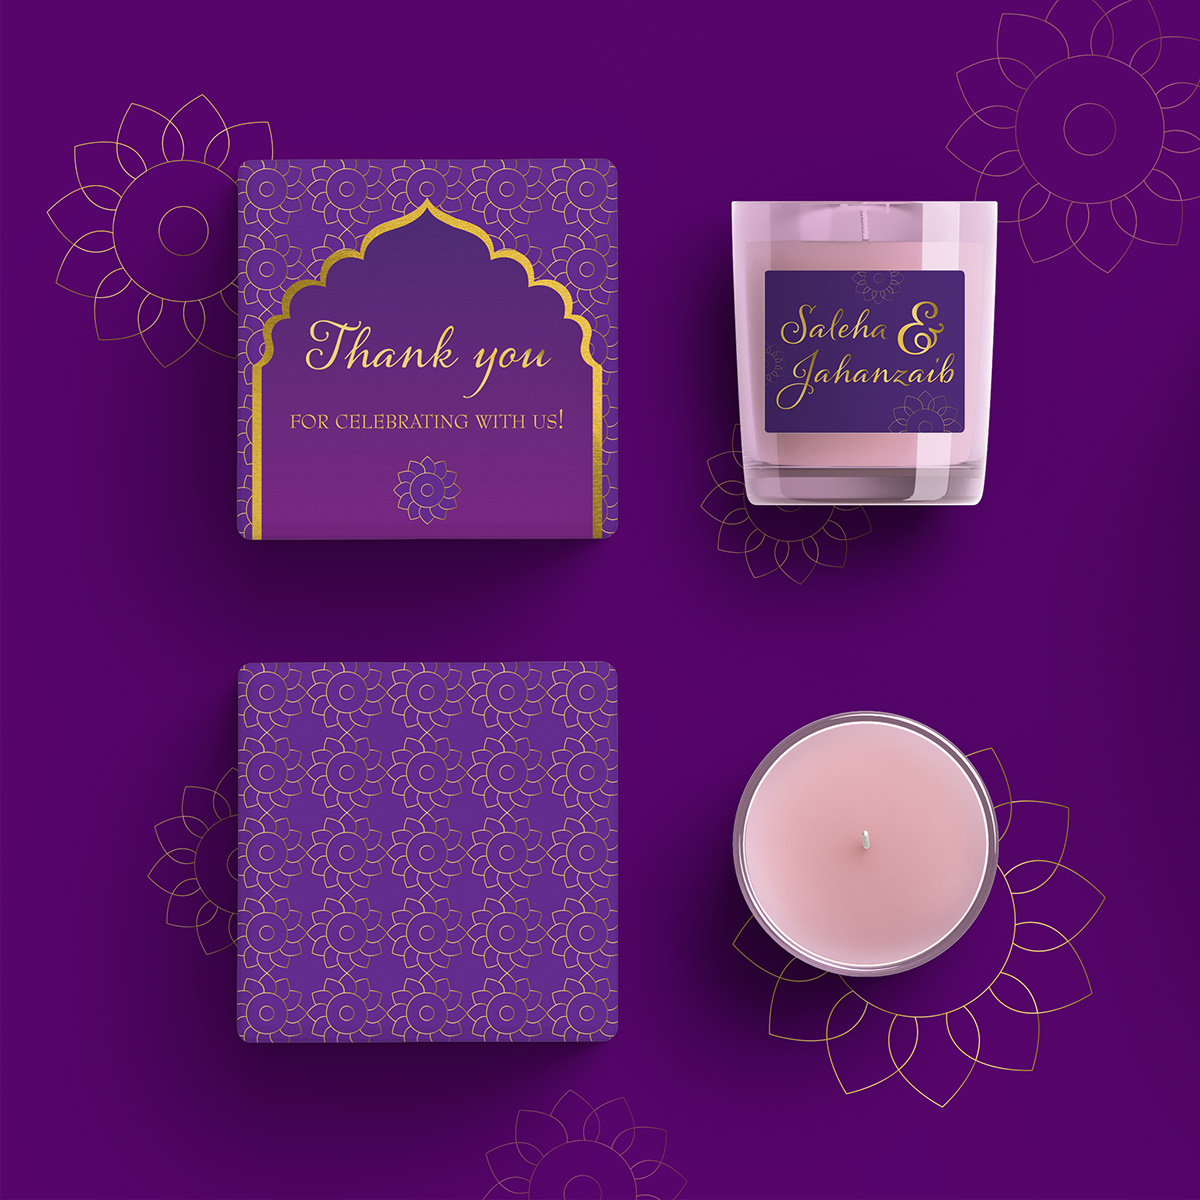 arabian nights Event Design invite design wedding favours packaging design